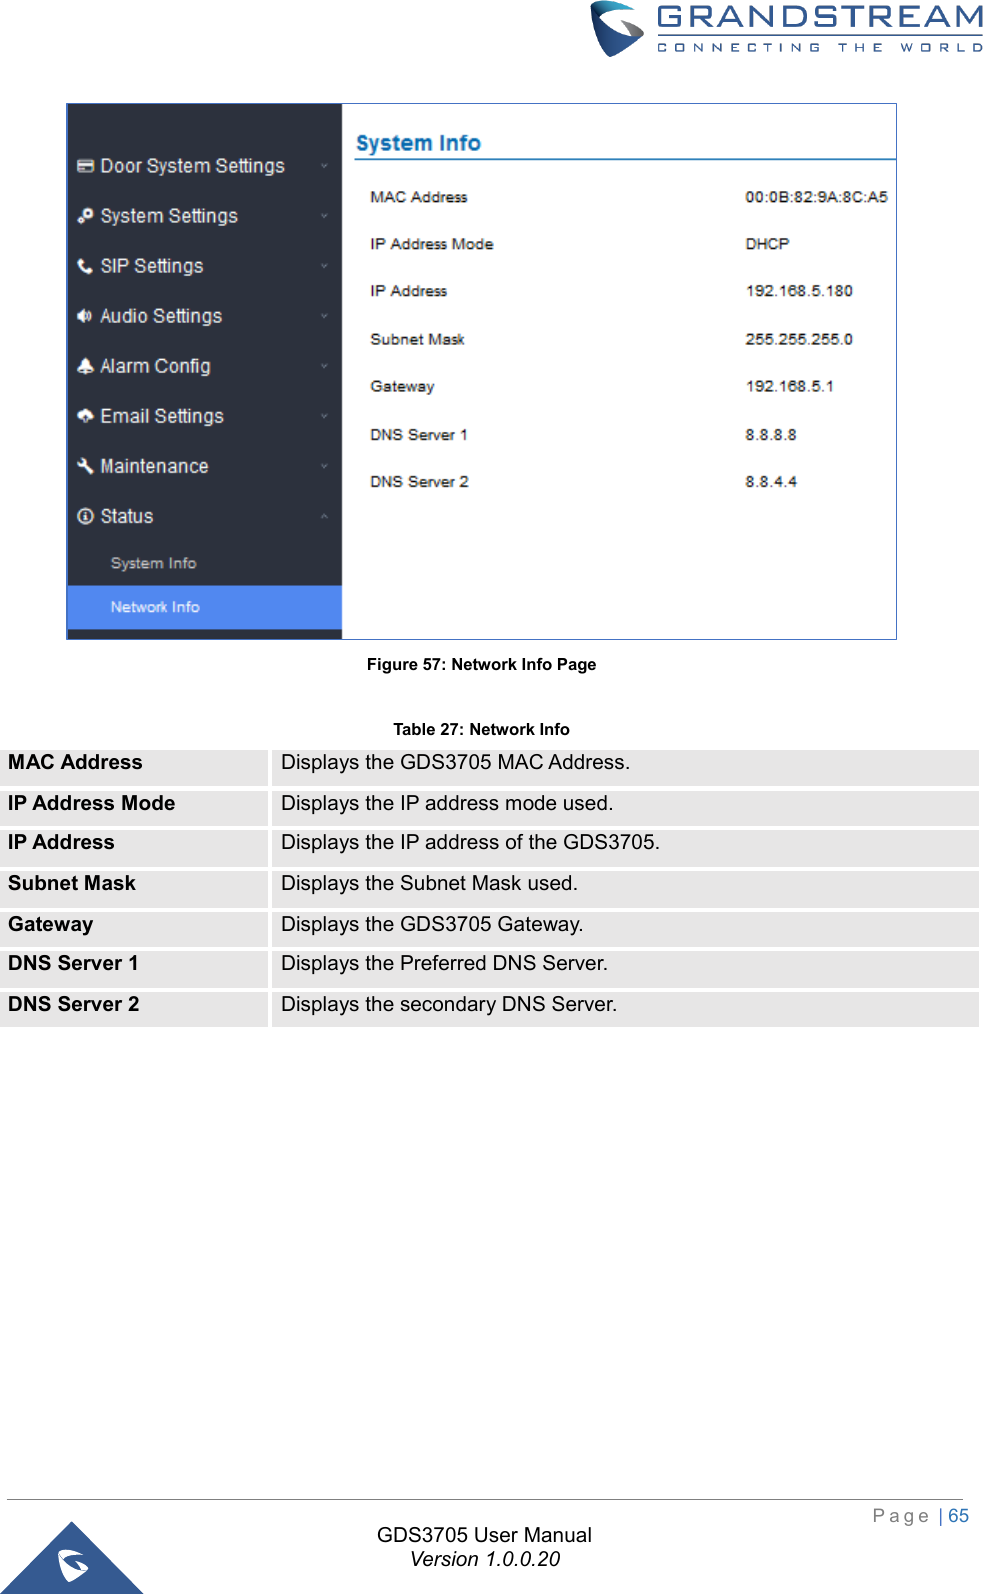                                                                         P a g e  | 65  GDS3705 User Manual Version 1.0.0.20  Figure 57: Network Info Page  Table 27: Network Info MAC Address Displays the GDS3705 MAC Address. IP Address Mode Displays the IP address mode used. IP Address Displays the IP address of the GDS3705. Subnet Mask Displays the Subnet Mask used. Gateway Displays the GDS3705 Gateway. DNS Server 1 Displays the Preferred DNS Server. DNS Server 2 Displays the secondary DNS Server.     